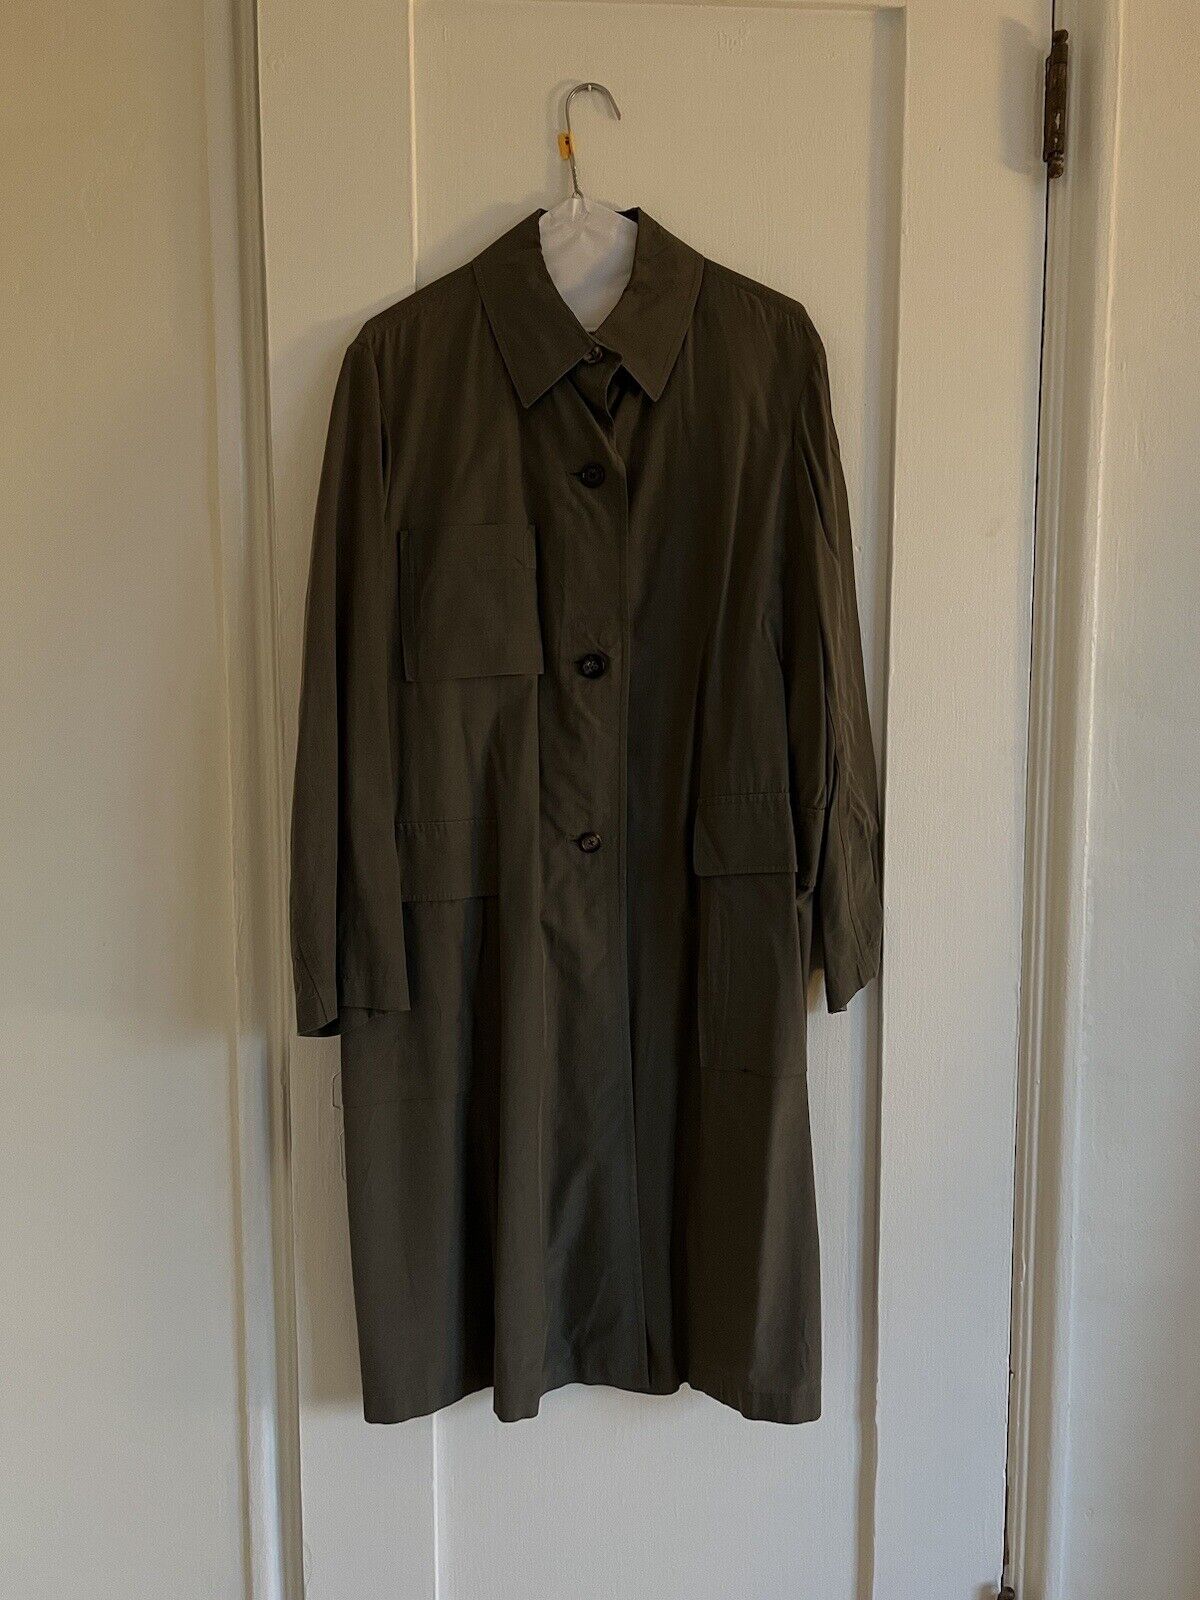 jil sander olive green trench coat